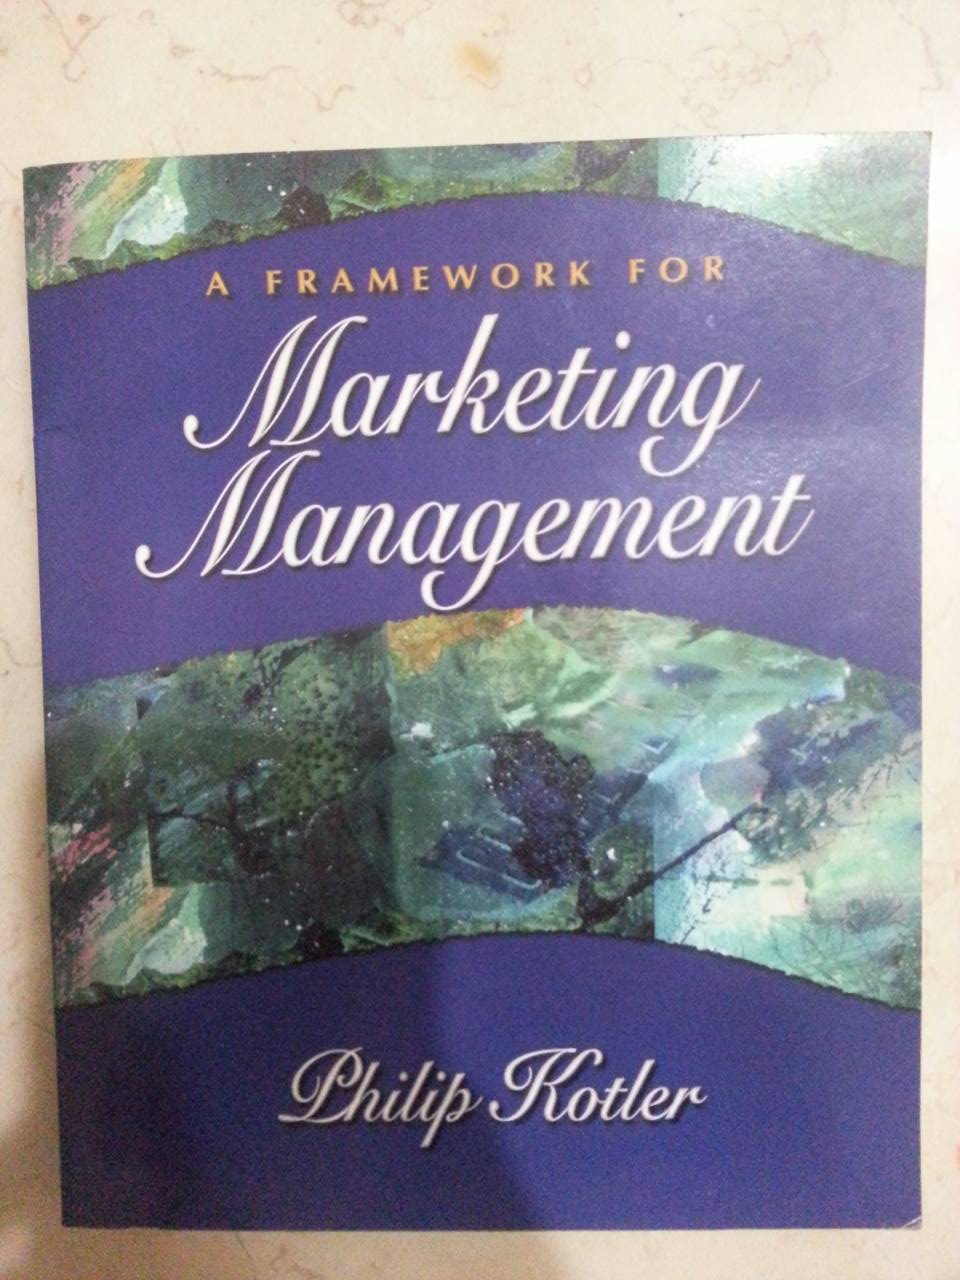 A Framework for Marketing Management 詳細資料